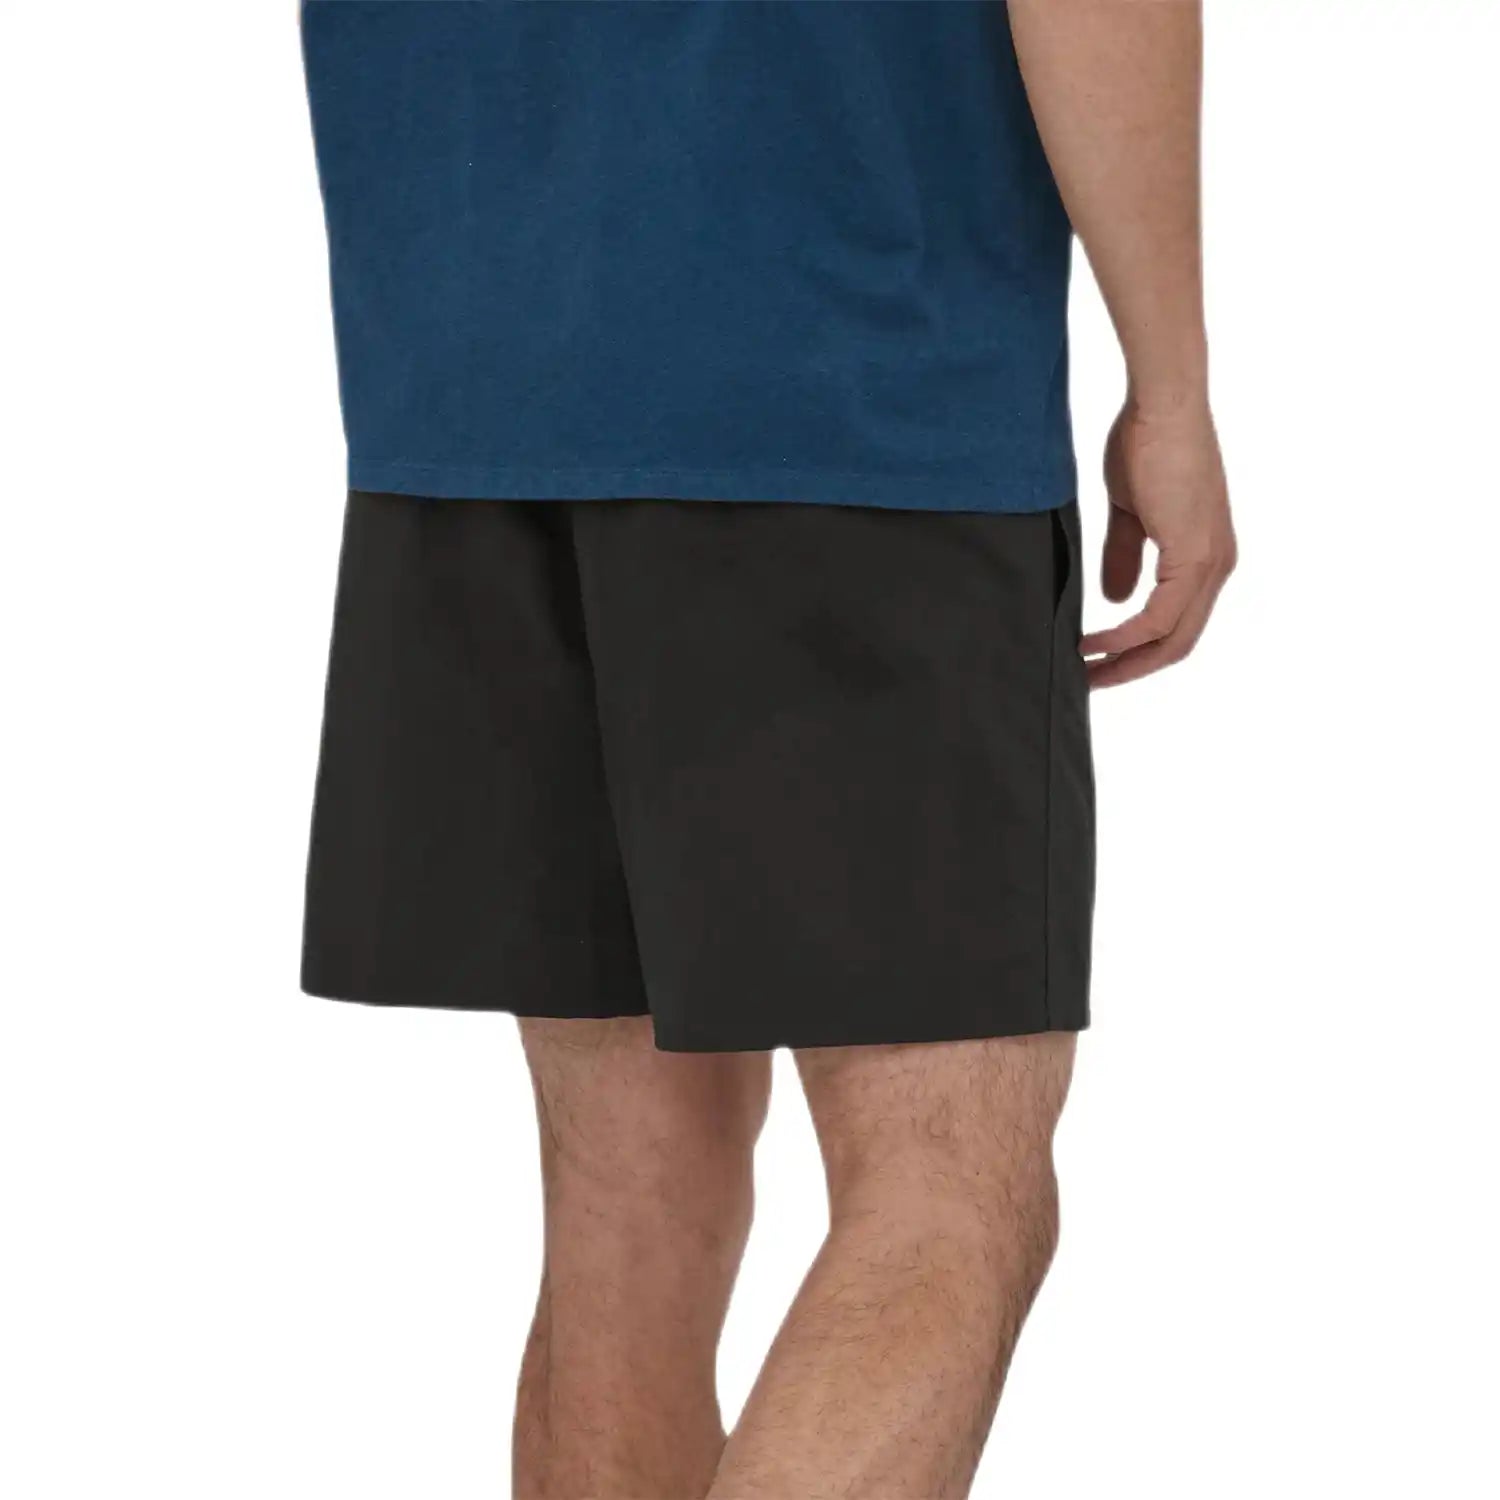 Patagonia M's Baggies™ Shorts - 5", Black, back view on model